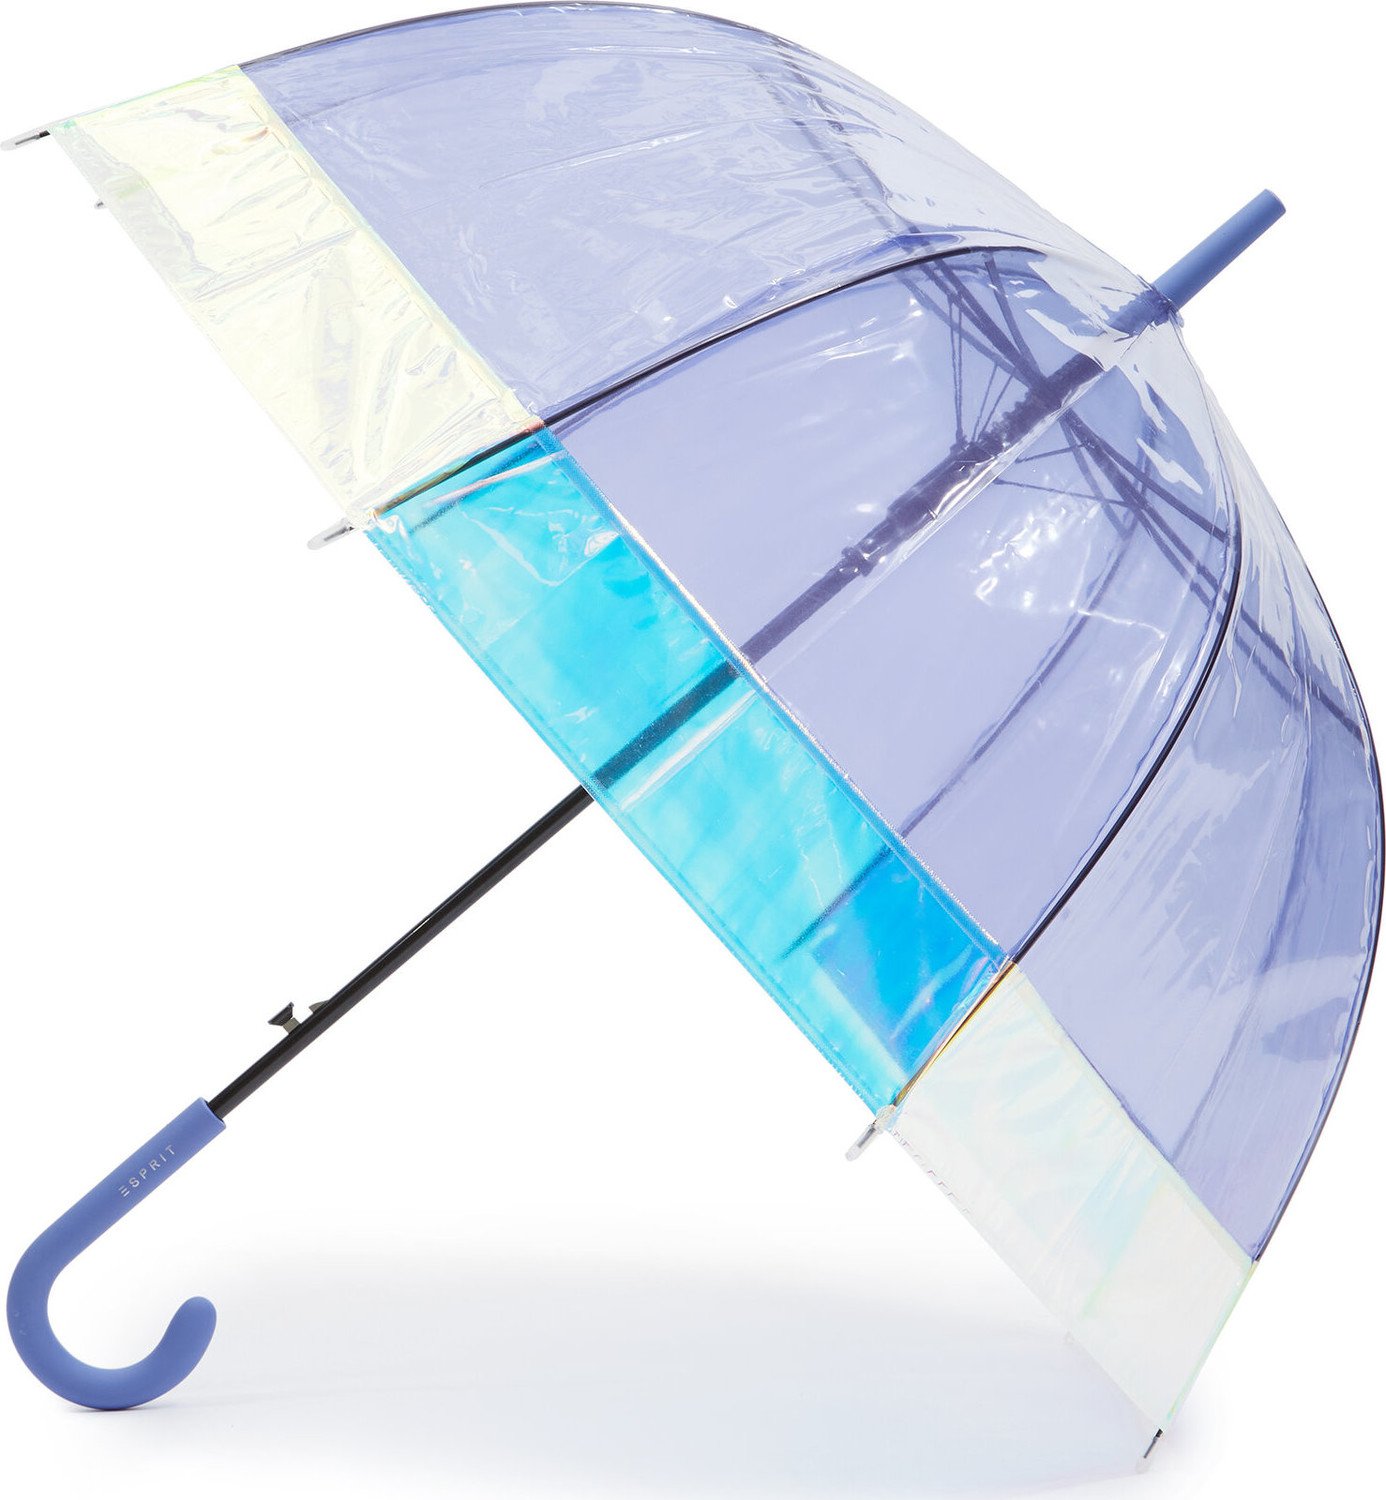 Deštník Esprit Long AC 58684 Transparent Shiny Border Lolite